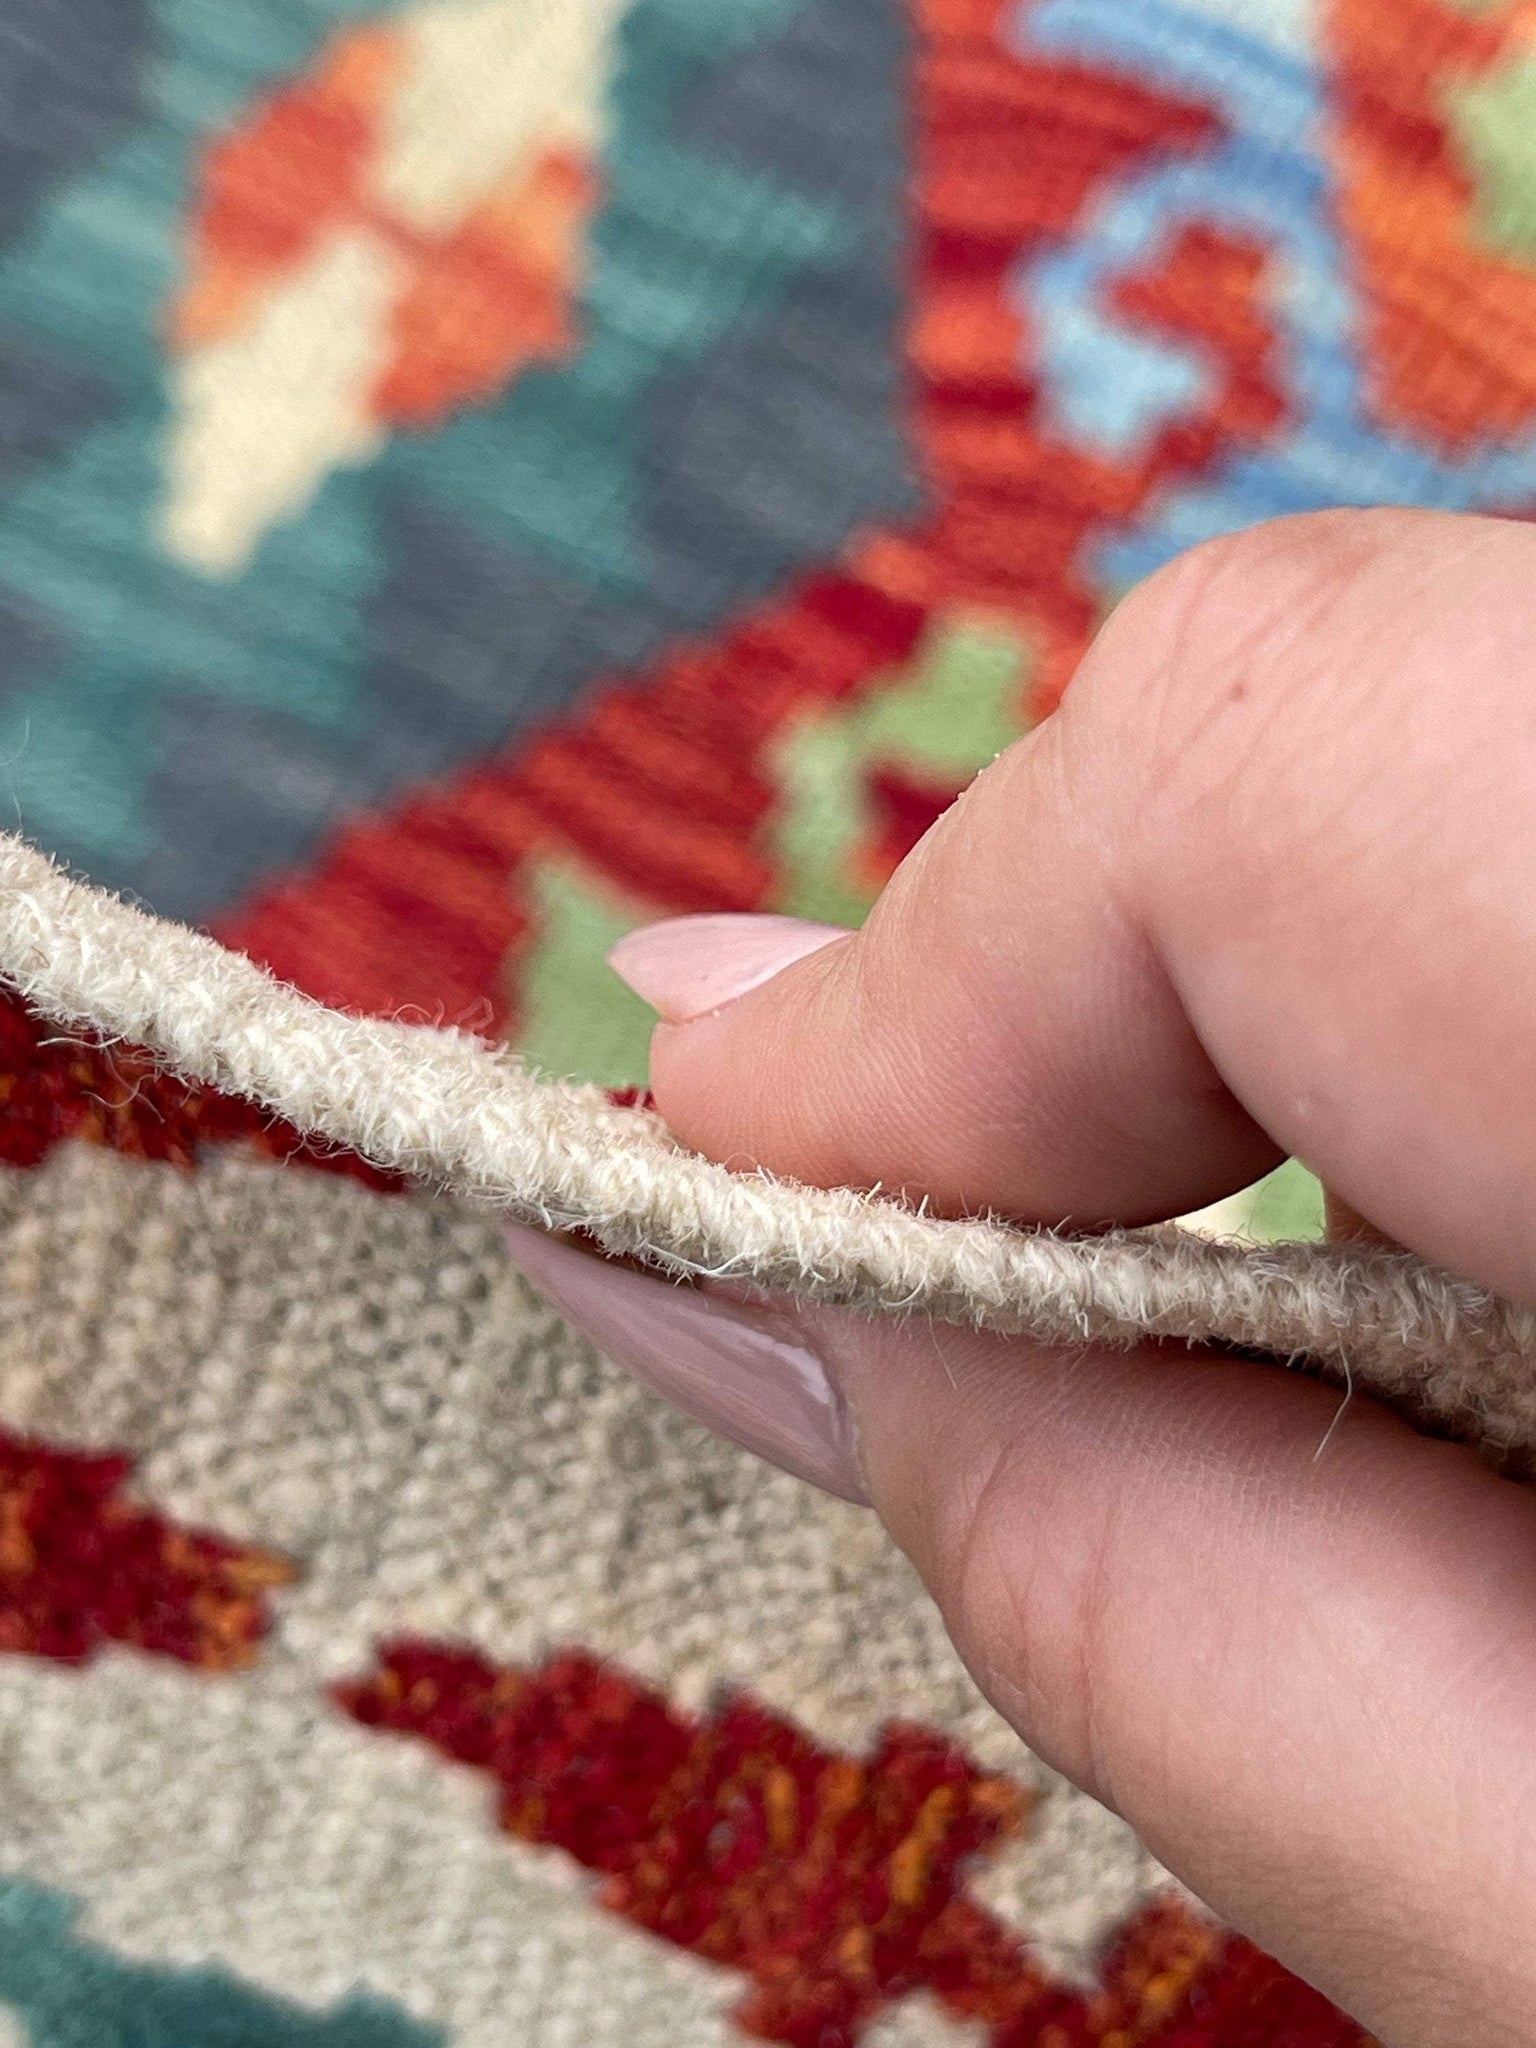 7x10 (215x305) Handmade Afghan Kilim Flatweave Rug | Ivory Green Sage Orange Blue | Boho Tribal Moroccan Outdoor Wool Knotted Woven